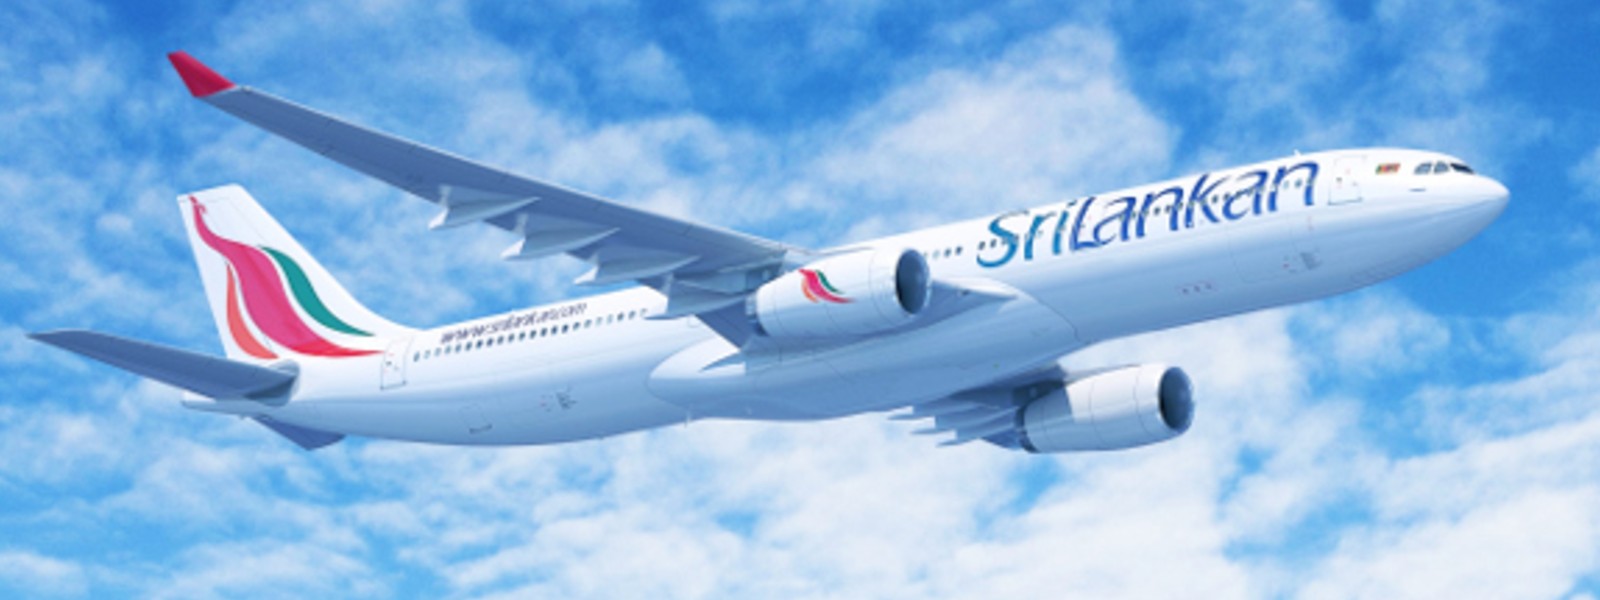 SriLankan Airlines’ scheduled flight suspension extended till May 15